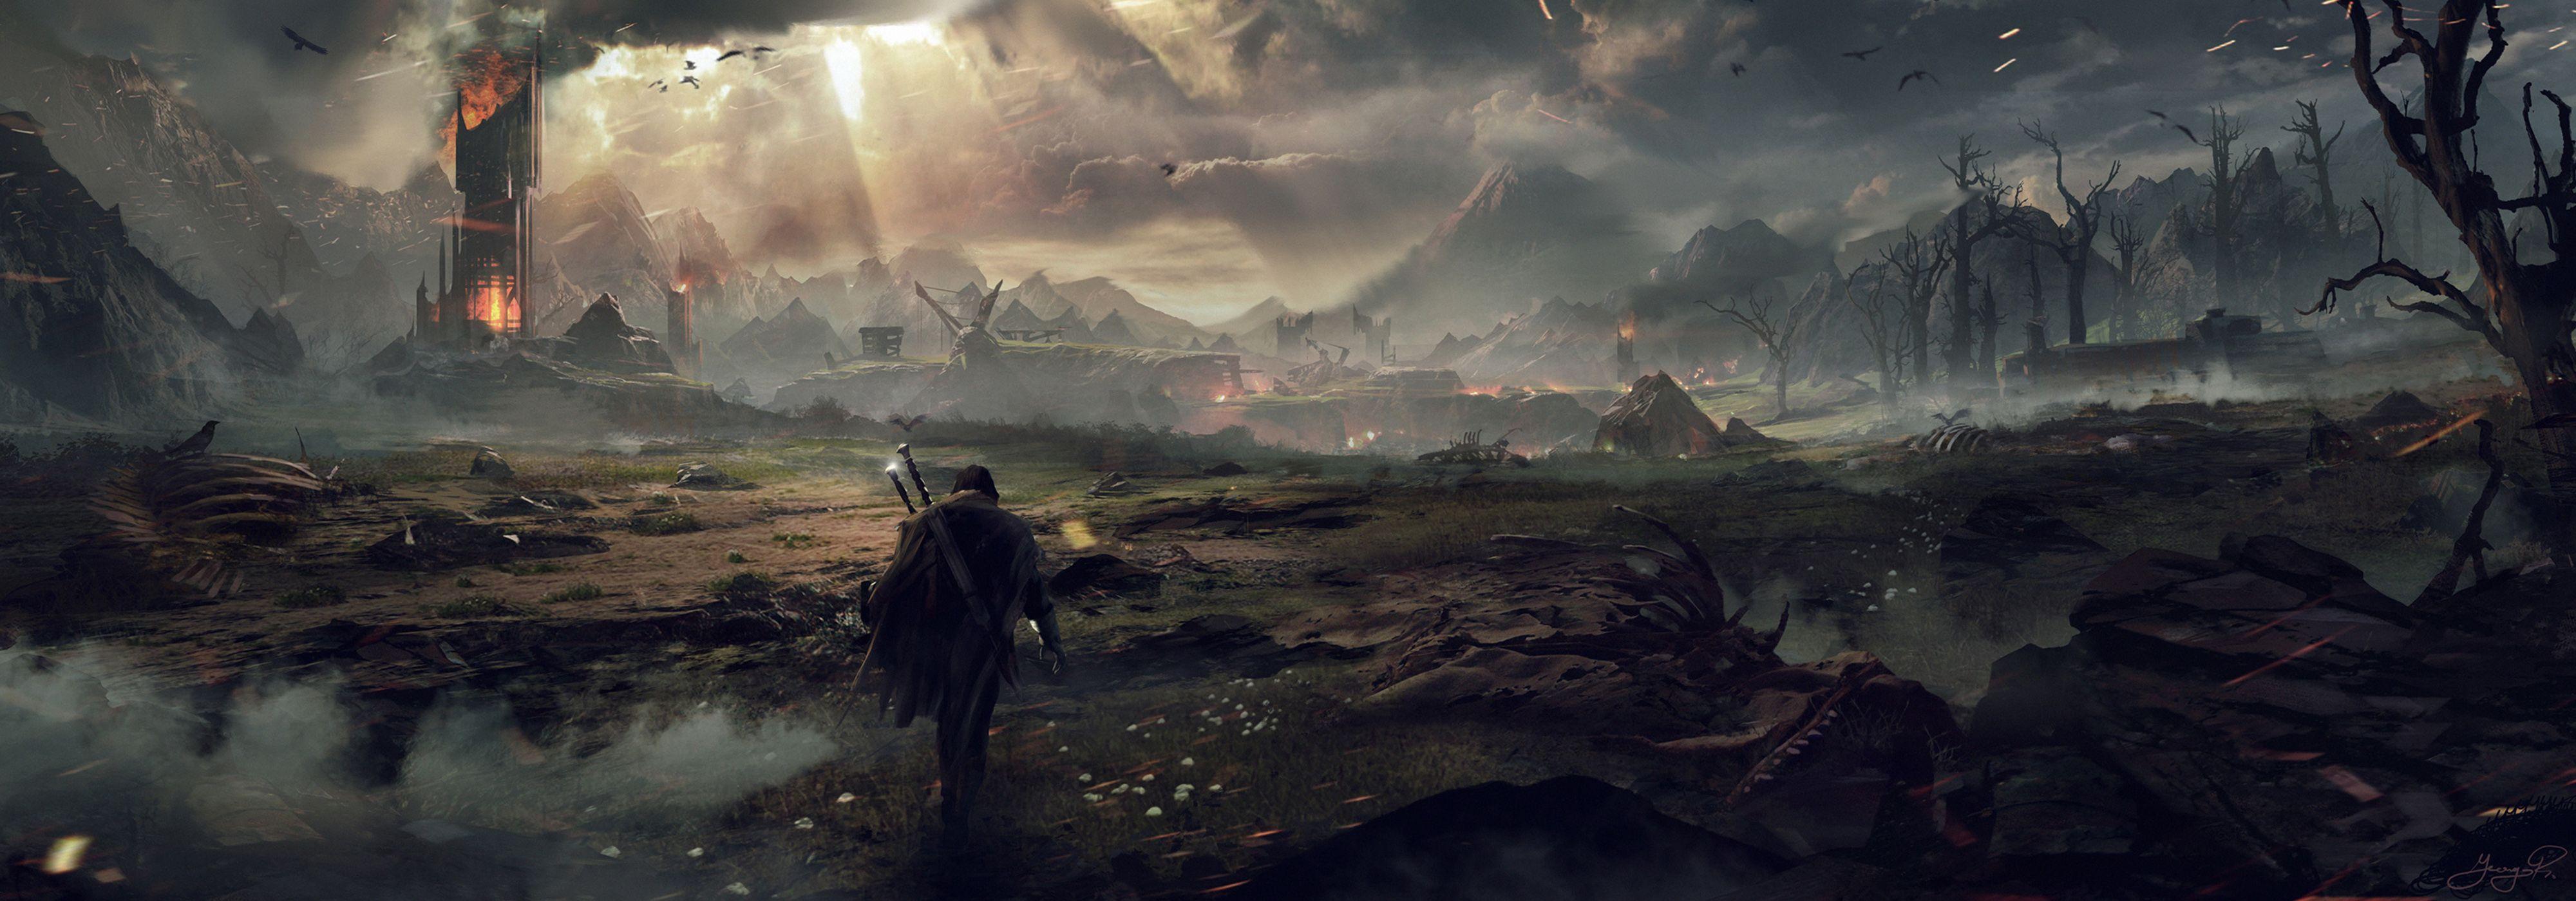 Middle Earth: Shadow Of War Announced Following Weekend Leak